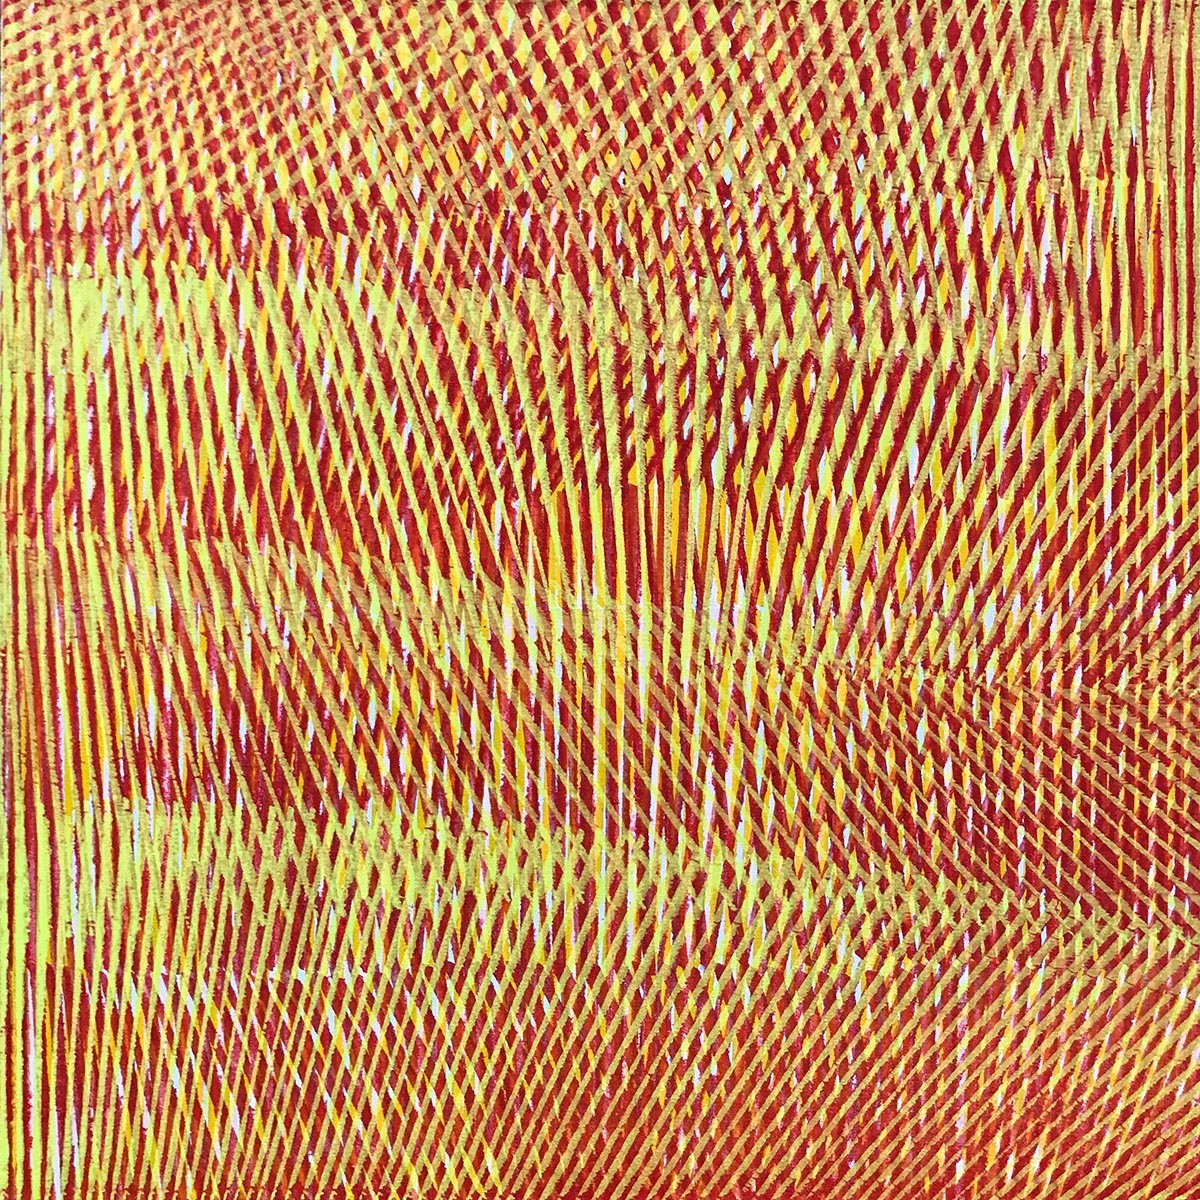 Nikola Dimitrov, >Bewegter FarbKlang GelbRot, 2018, Pigmente, Bindemittel auf Leinwand, 60 × 60 cm